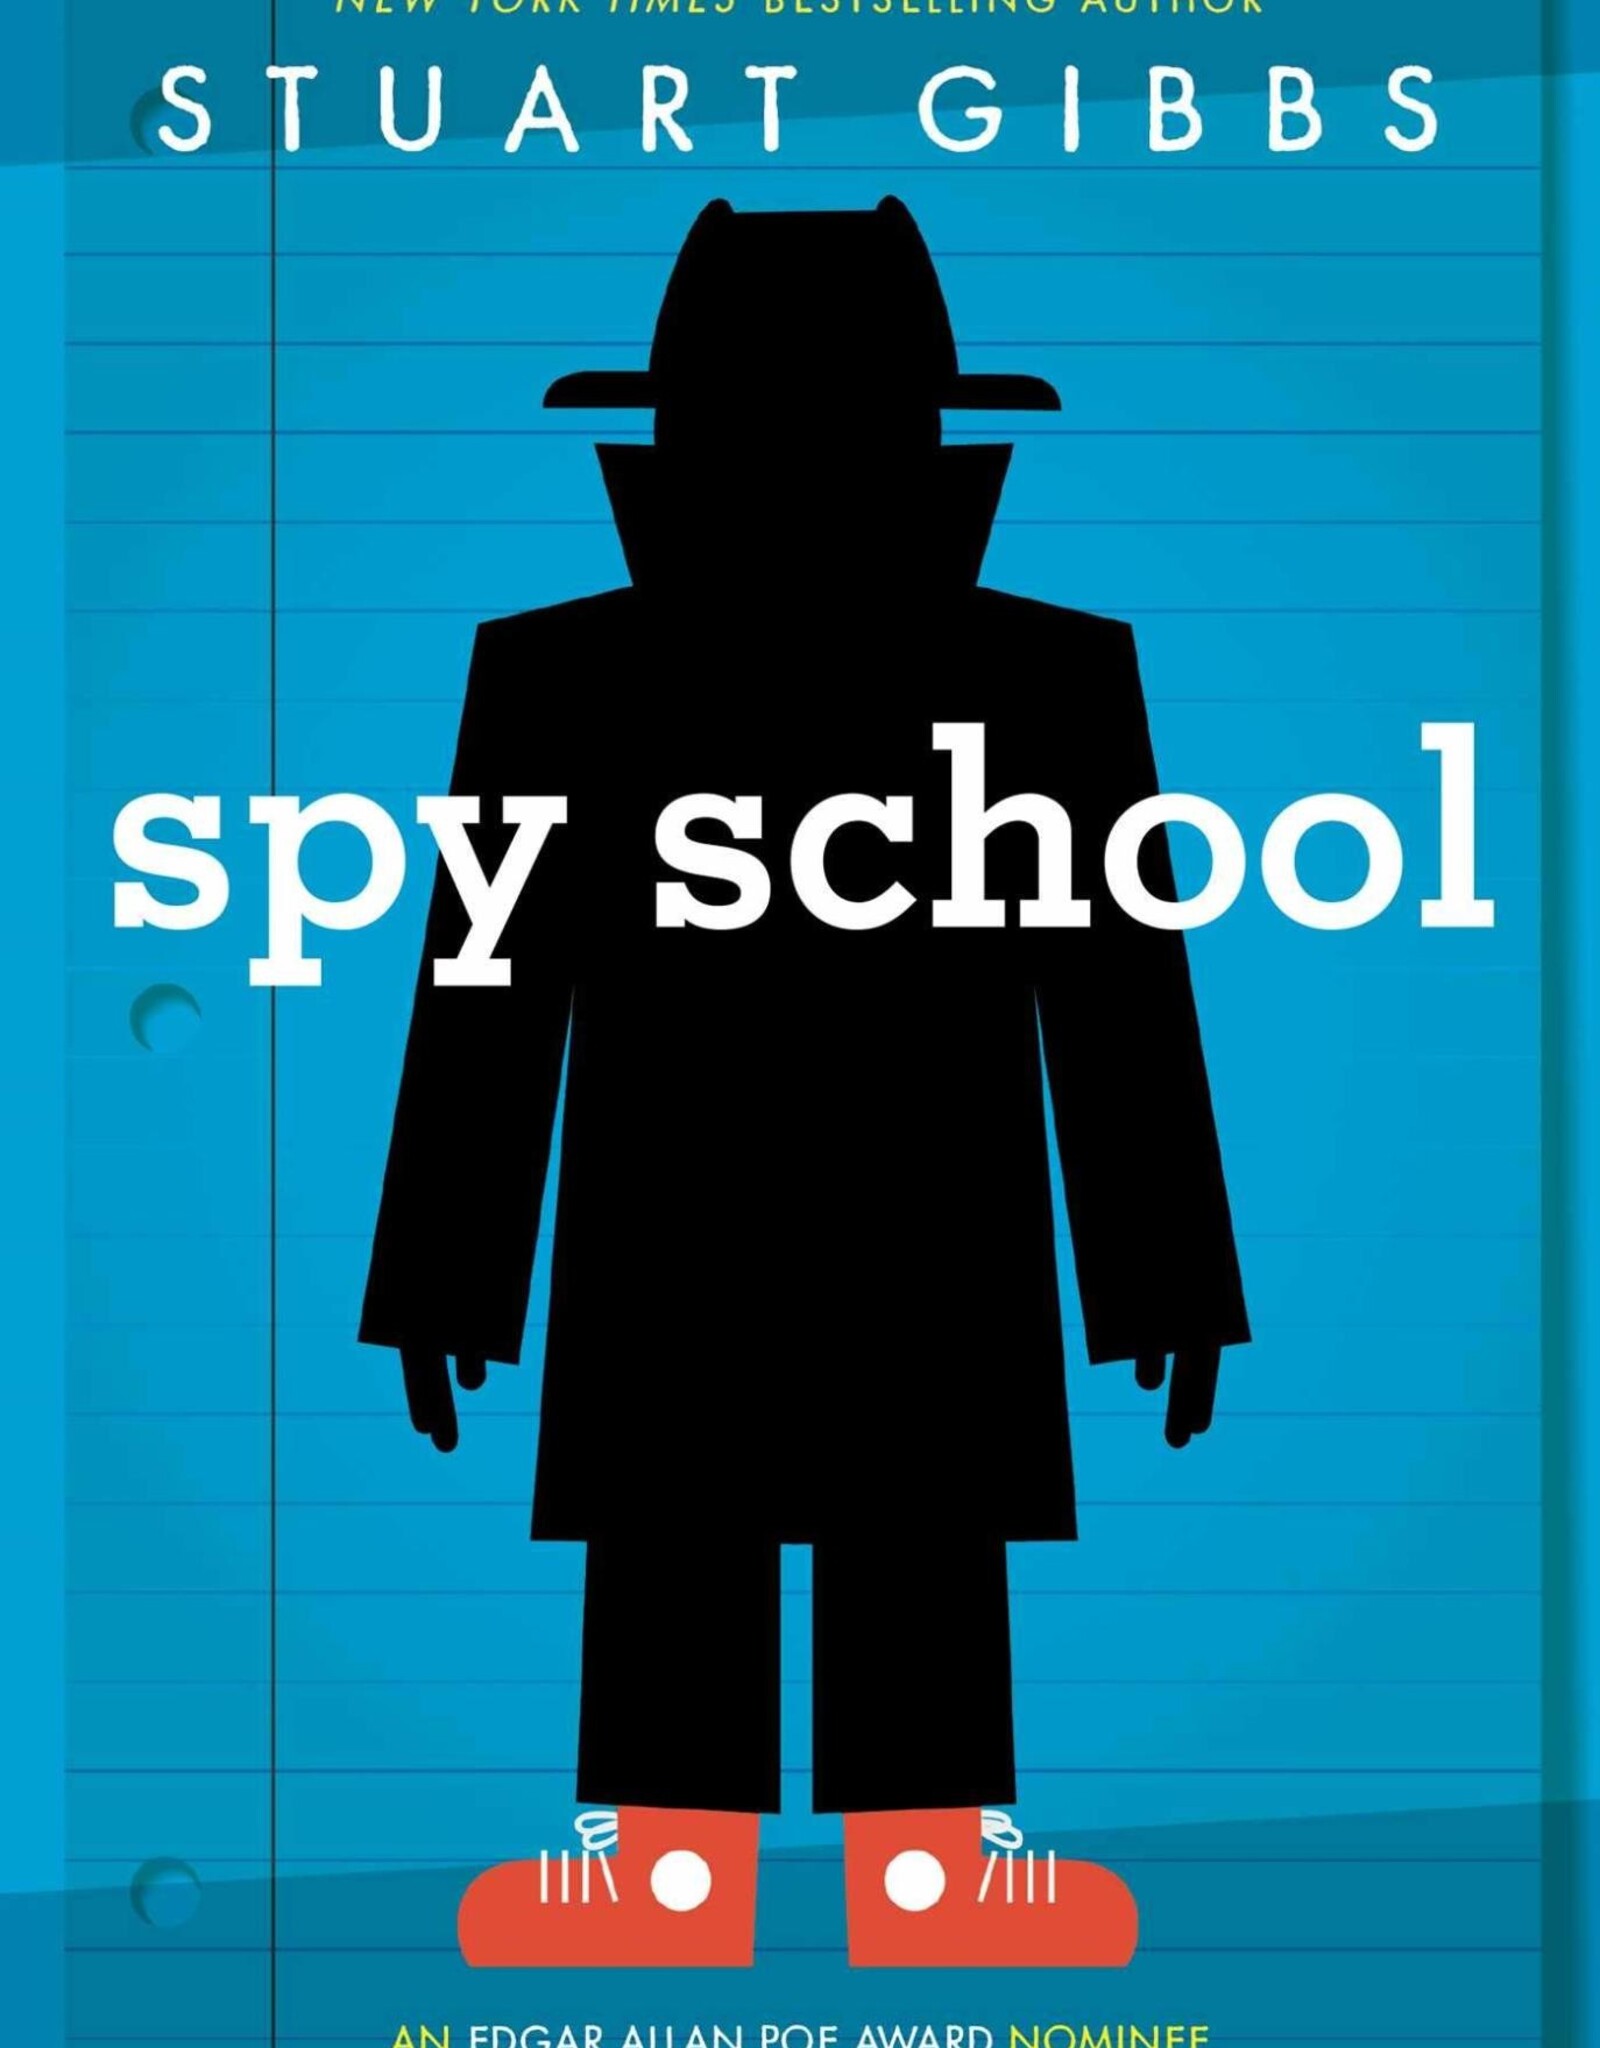 Simon & Schuster Spy School